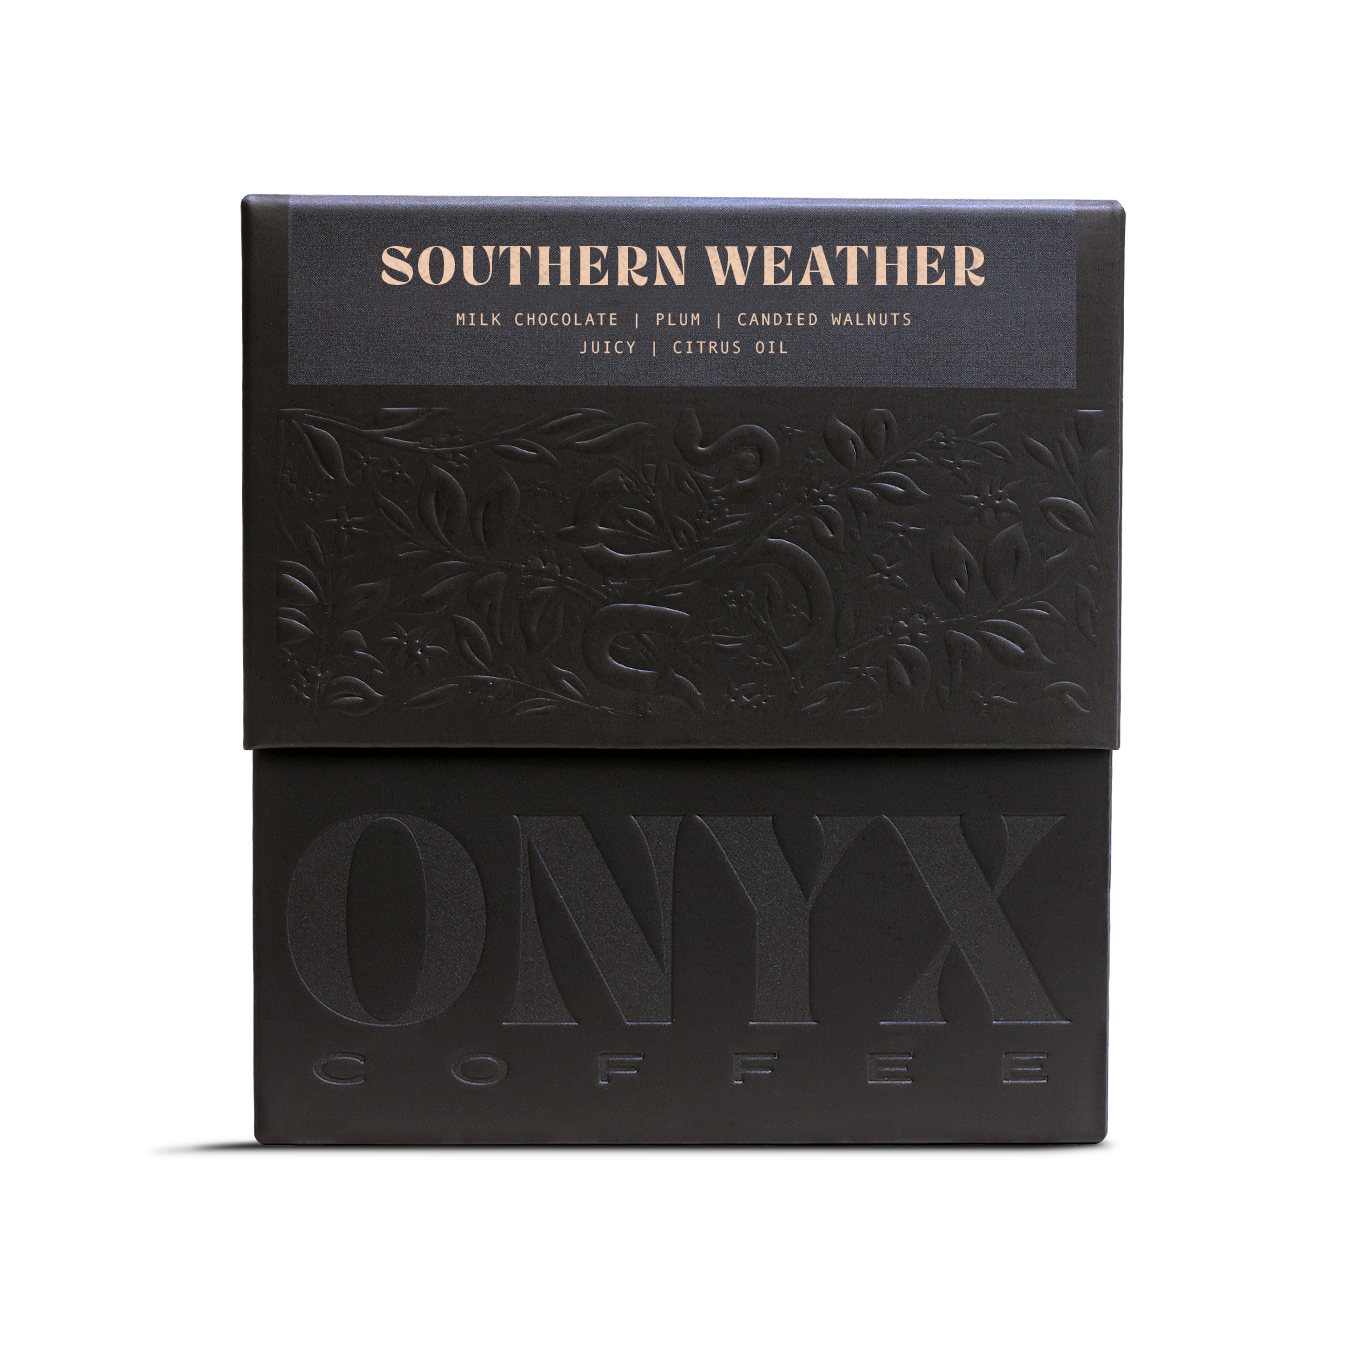 Onyx Coffee Lab Southern Weather